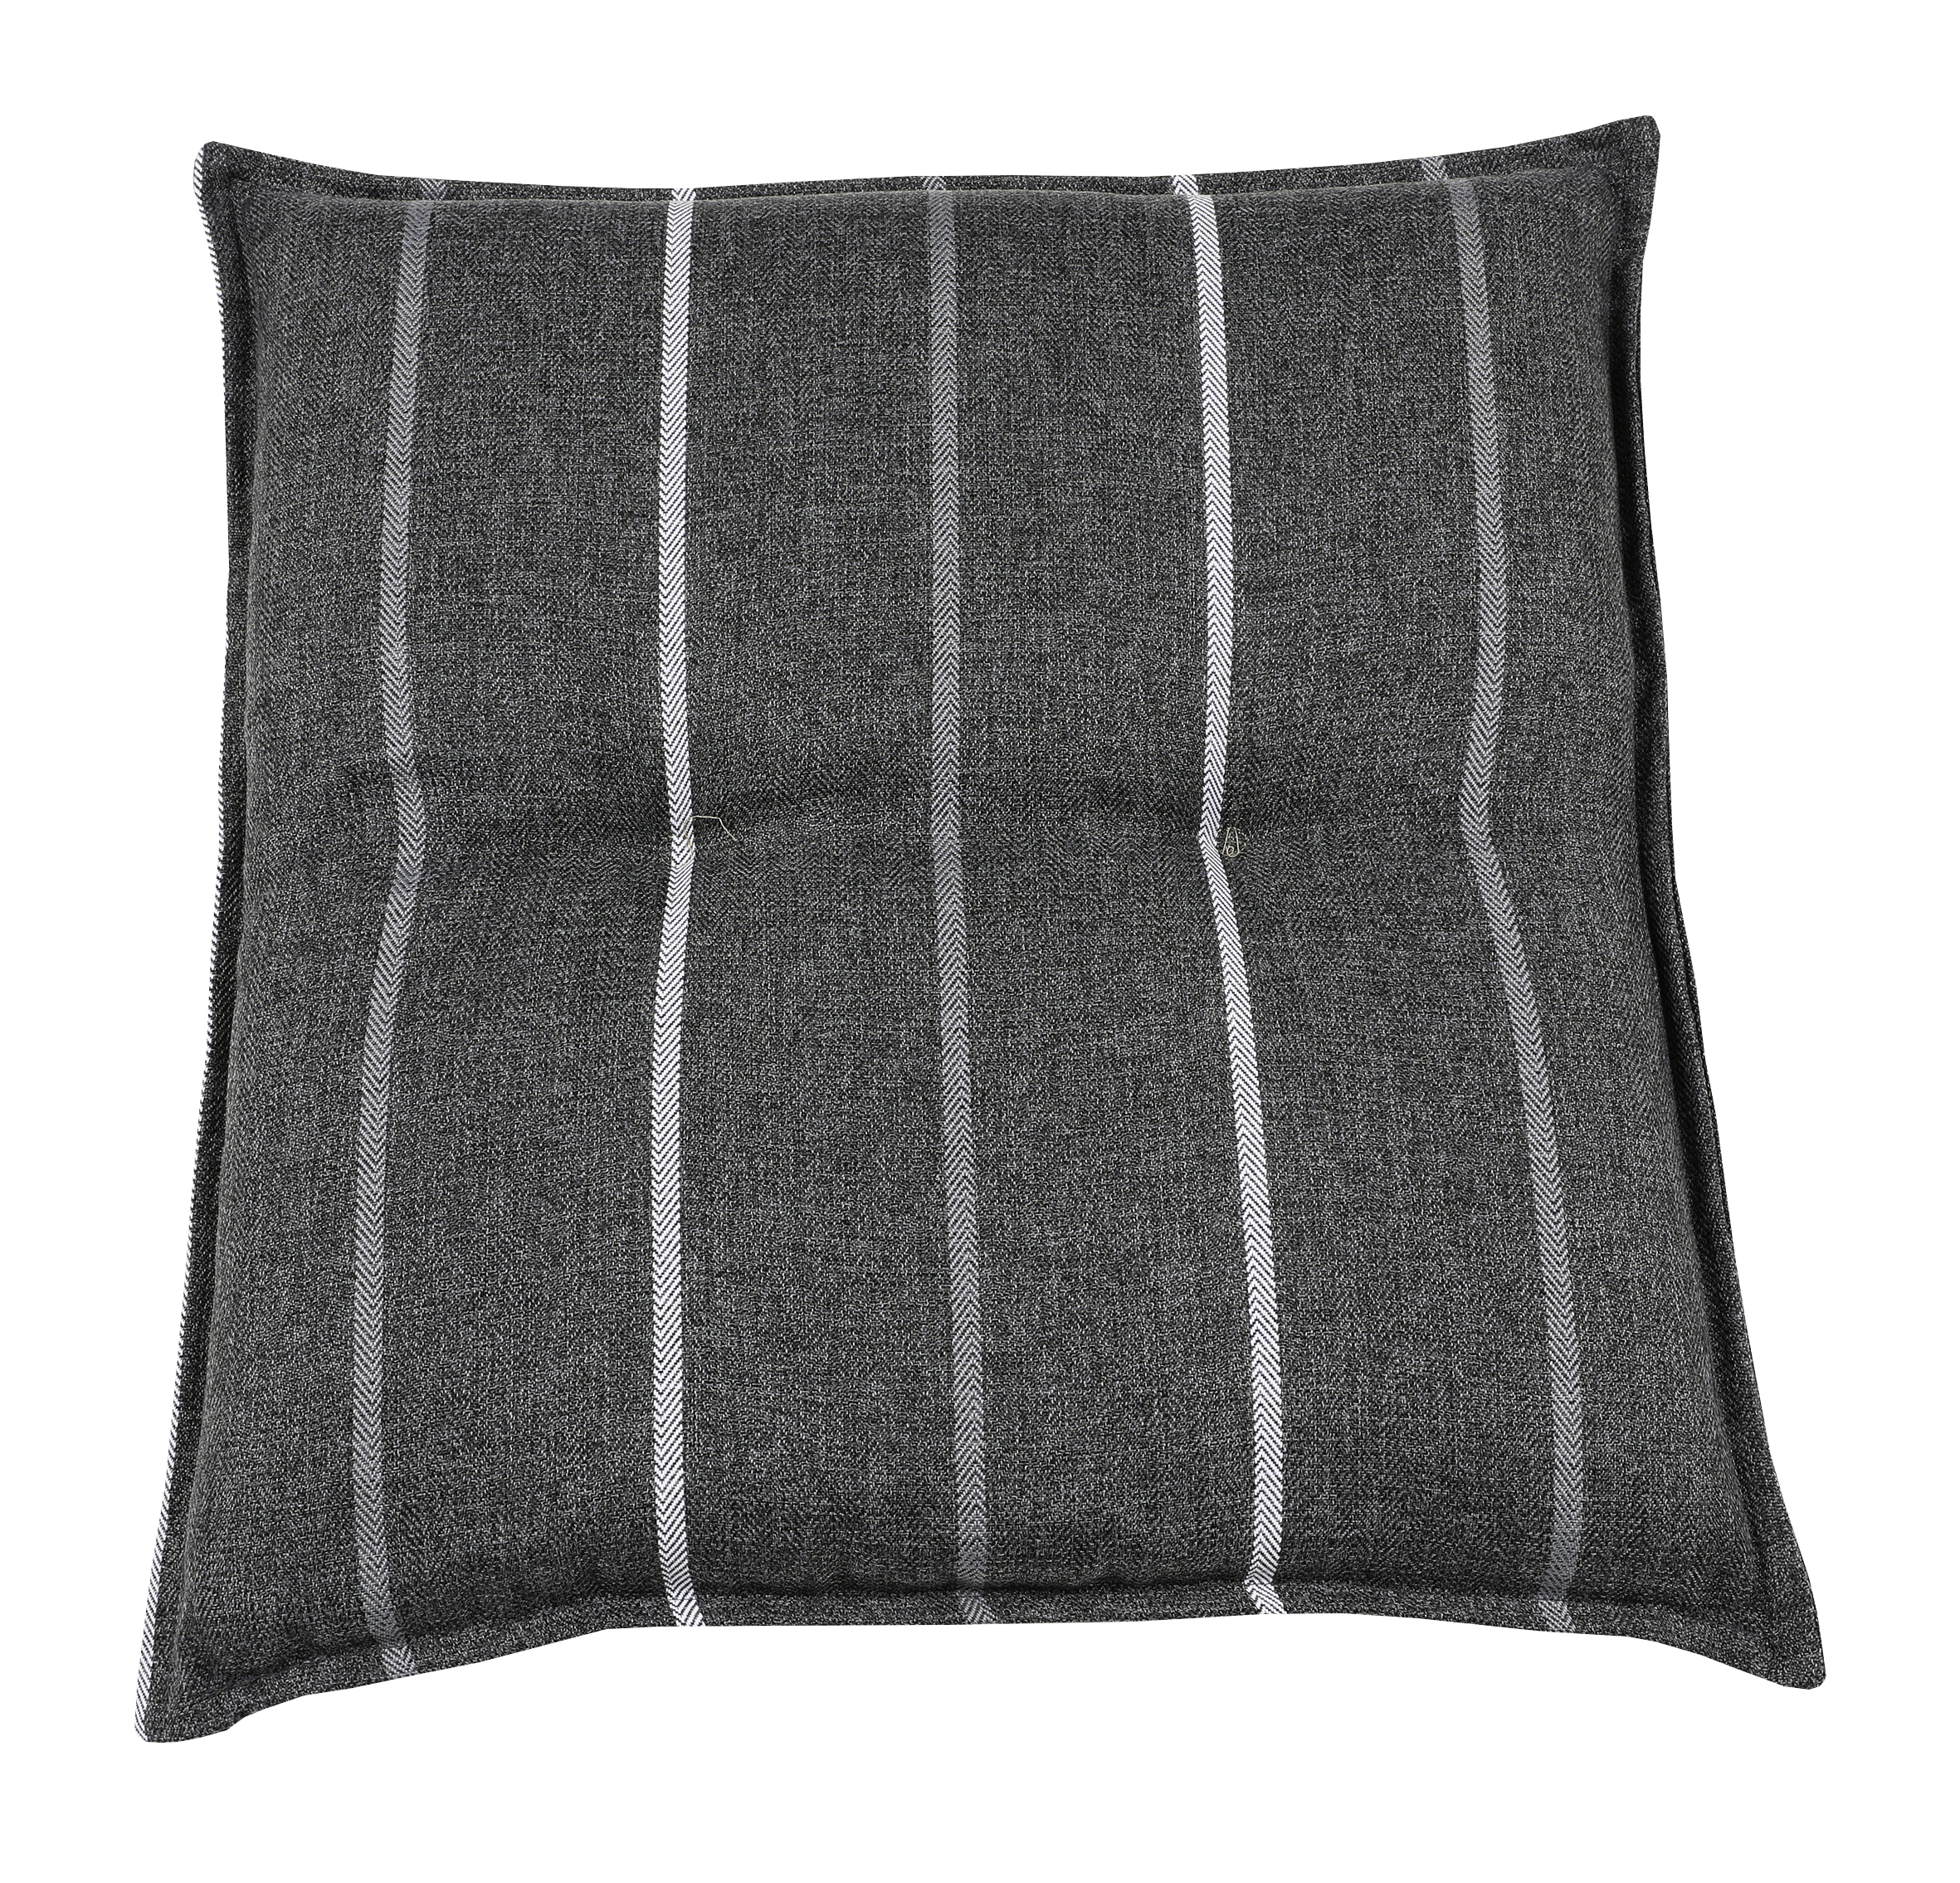 Textil GO-DE ,Hocker-Auflage ,grau ,23524-03